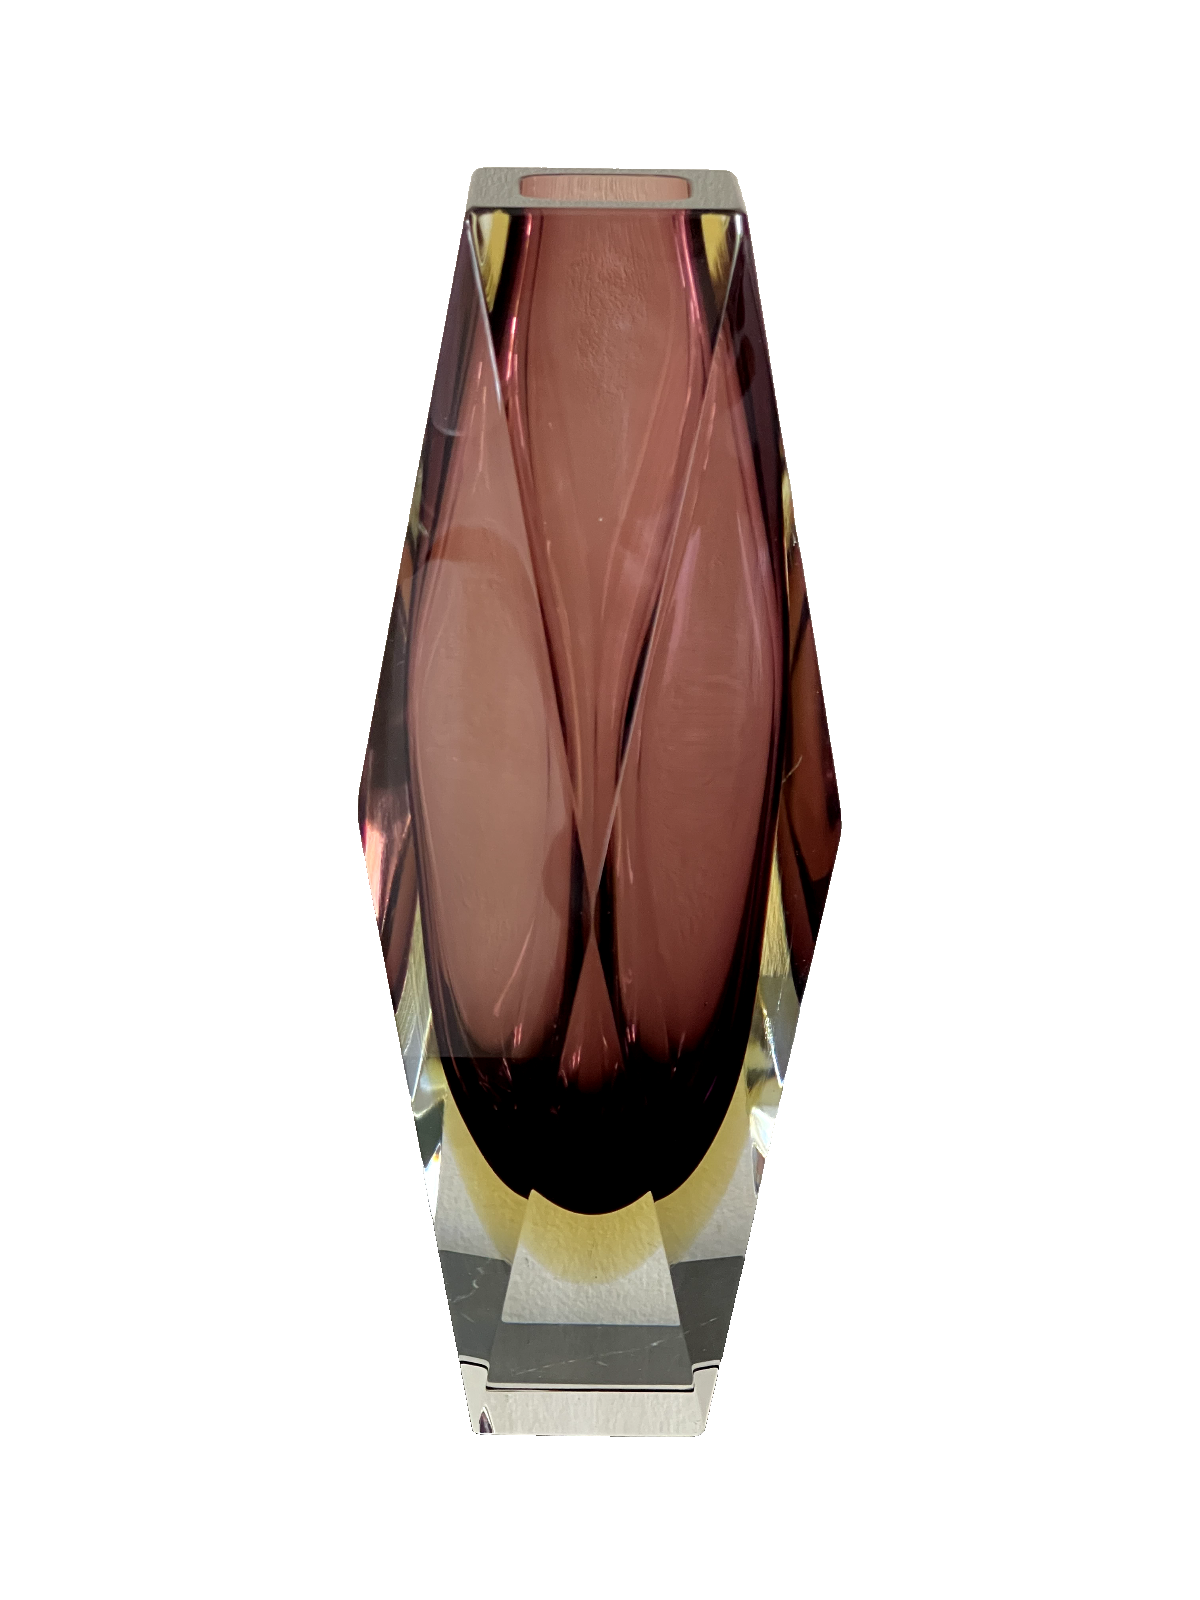 Vintage Murano Multi Faceted Sommerso Mandruzzato  10" Tall Glass Vase - $296.01